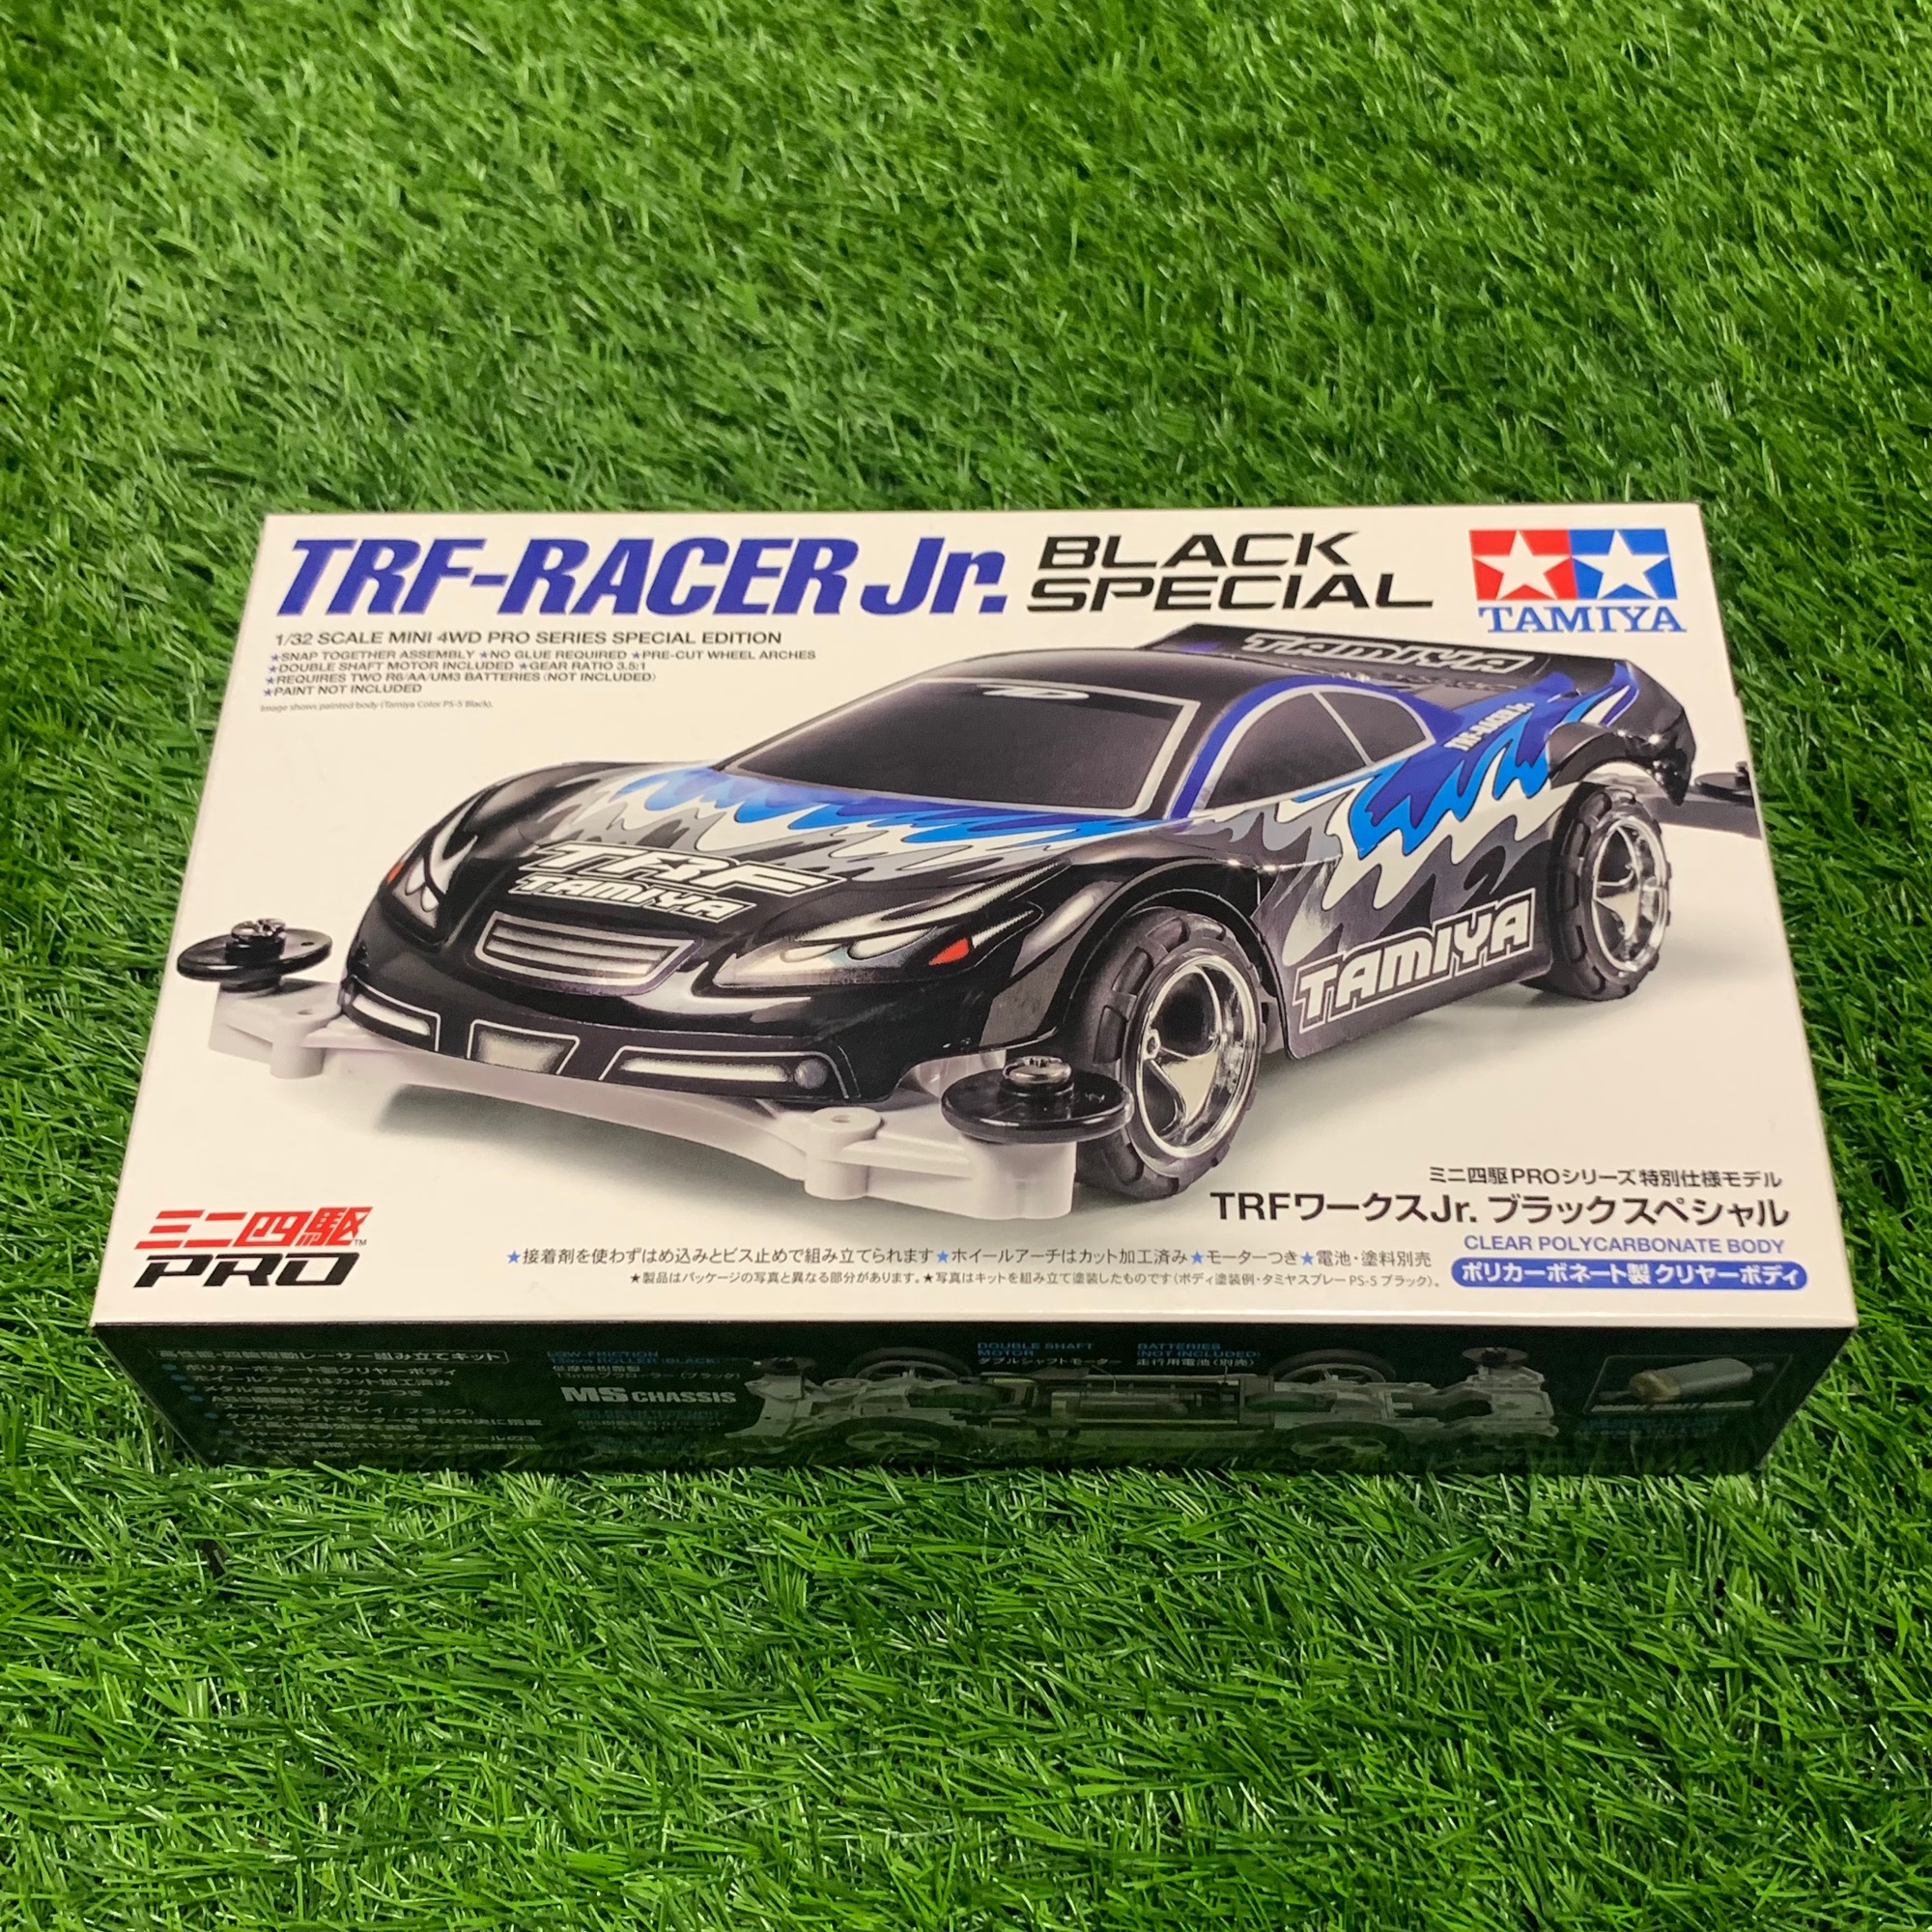 ミニ四駆 TRF-RACER Jr.BLACK SPECIAL - 模型製作用品